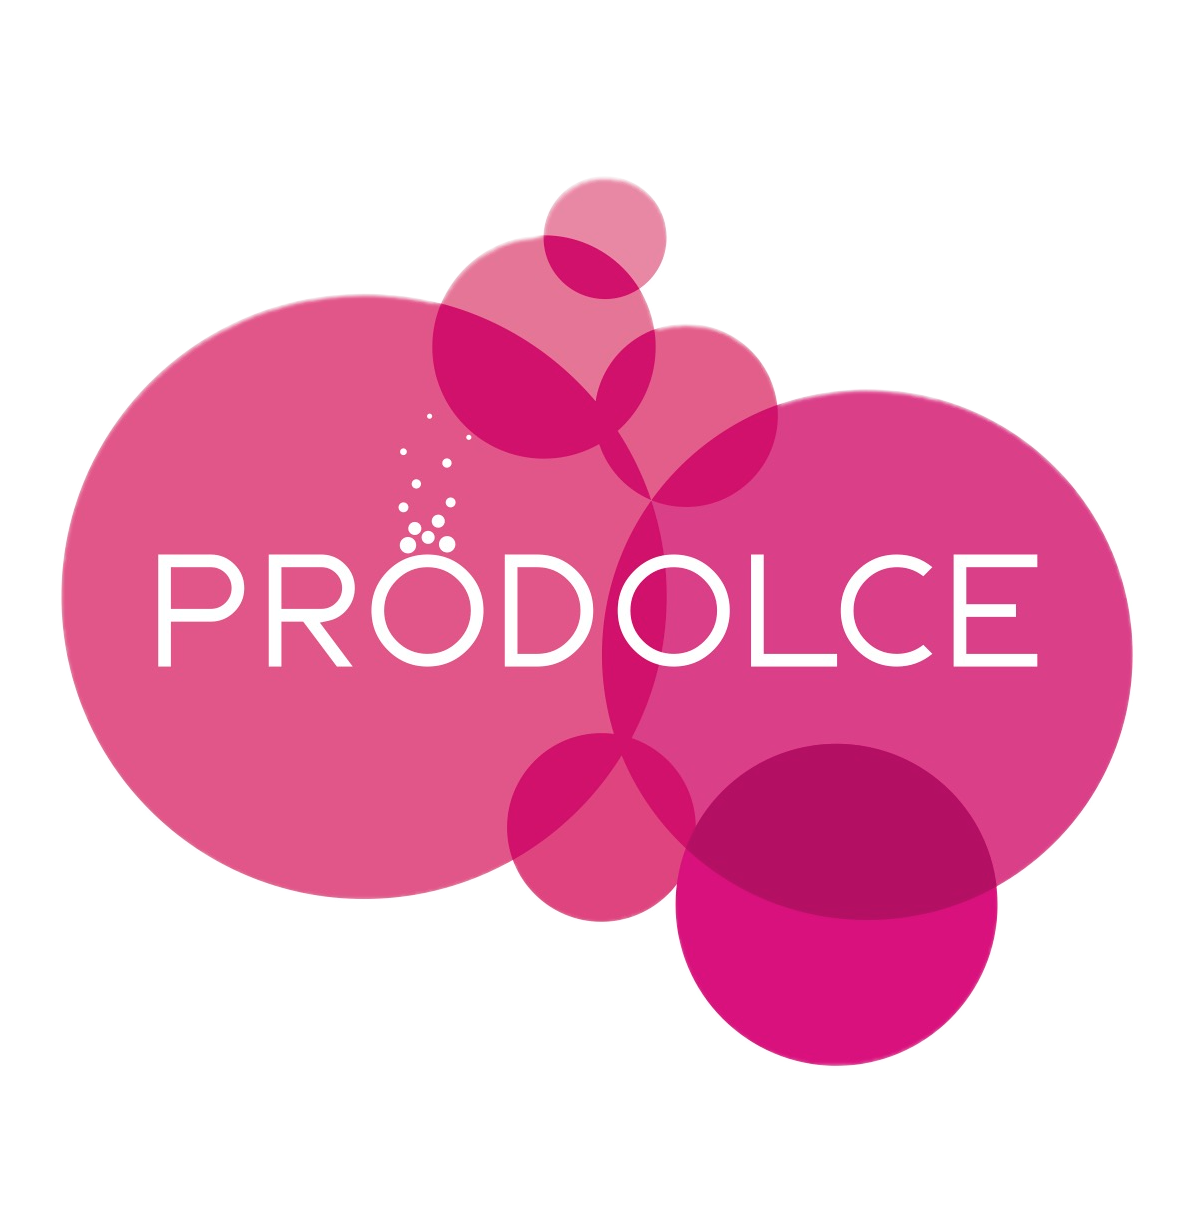 Prodolce - Vegan + Natural Demi-Sec Sparkling Wine